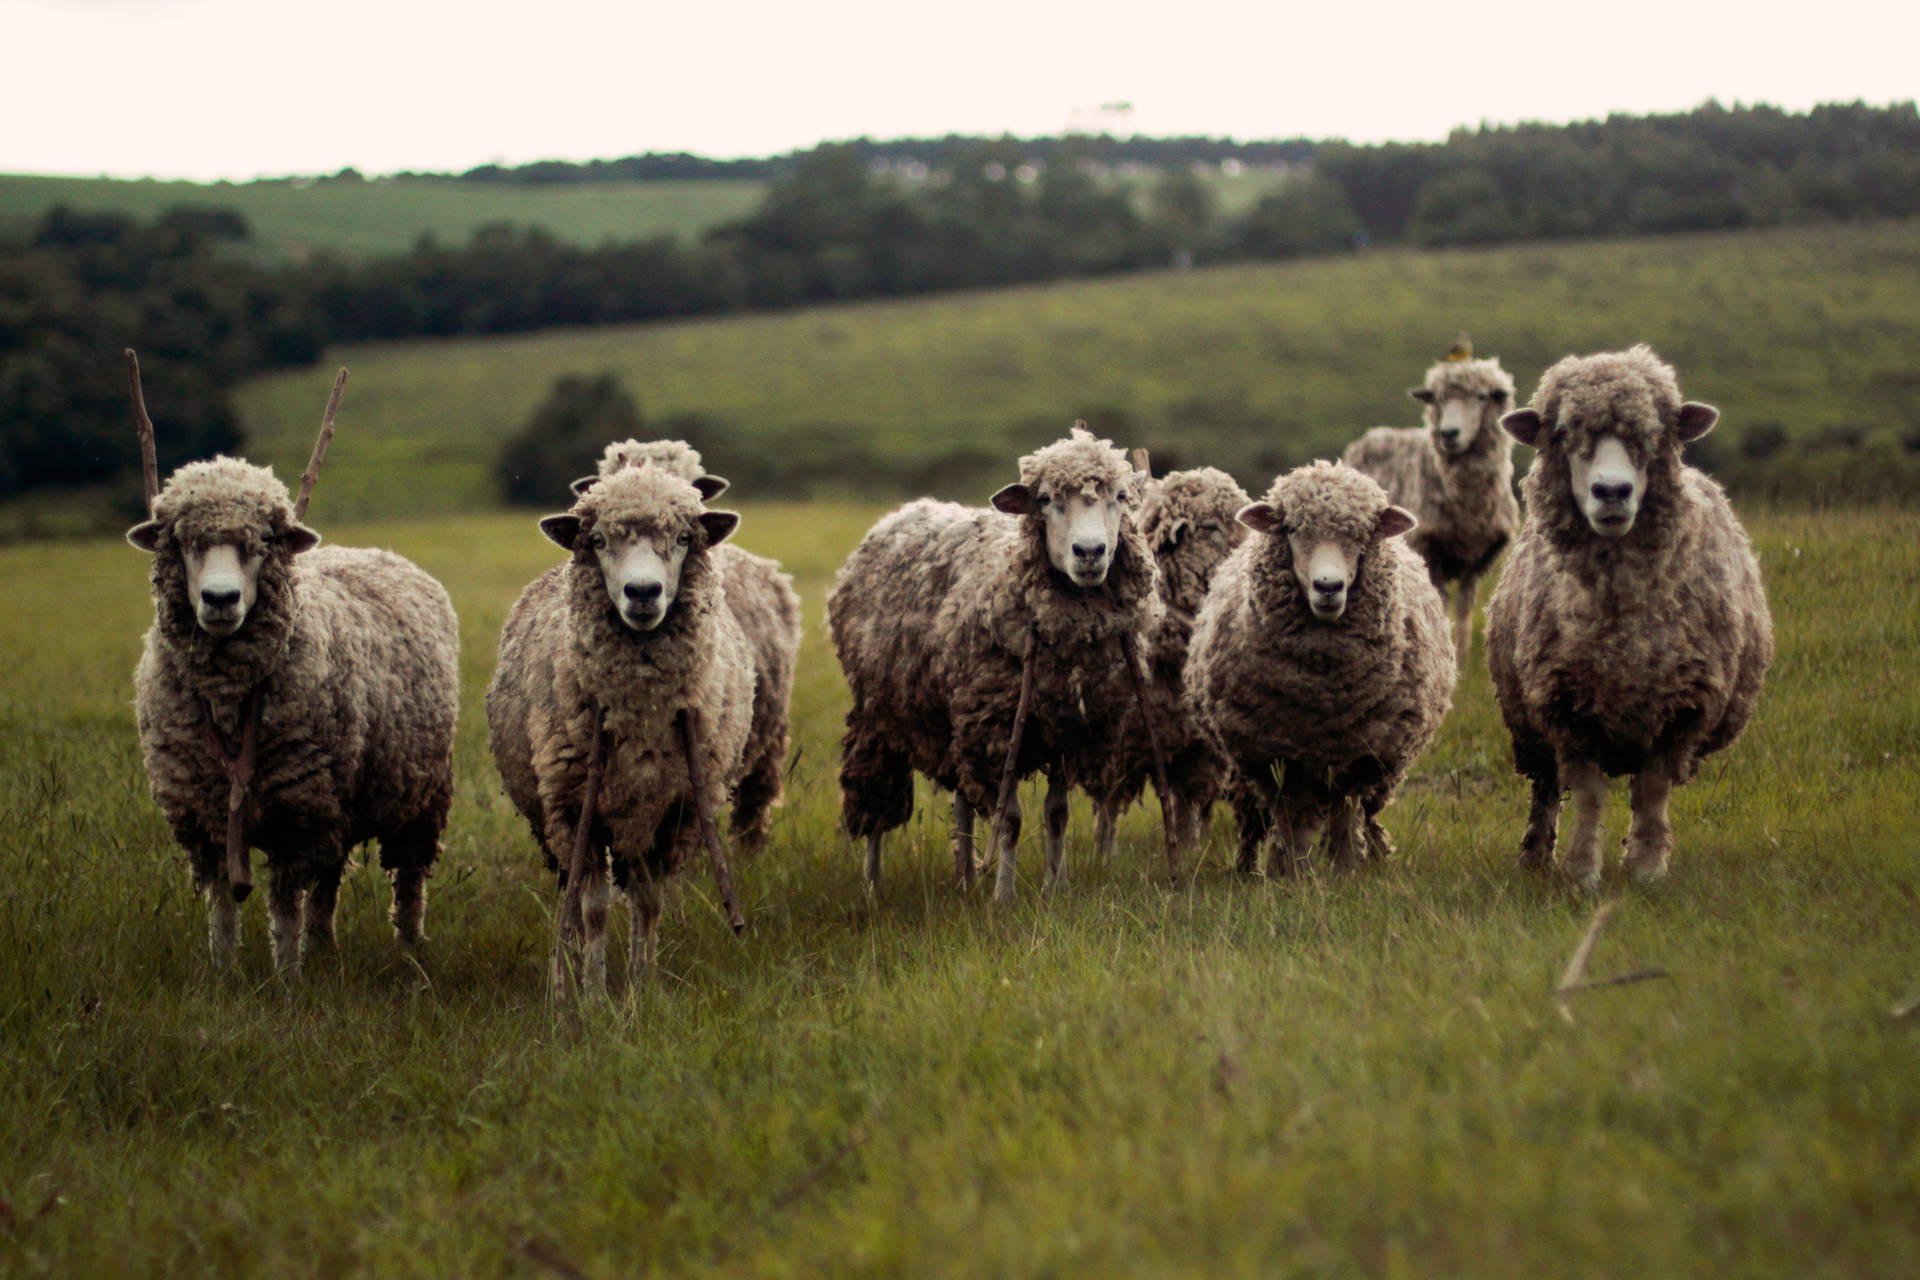 Sheep Herd In The Field